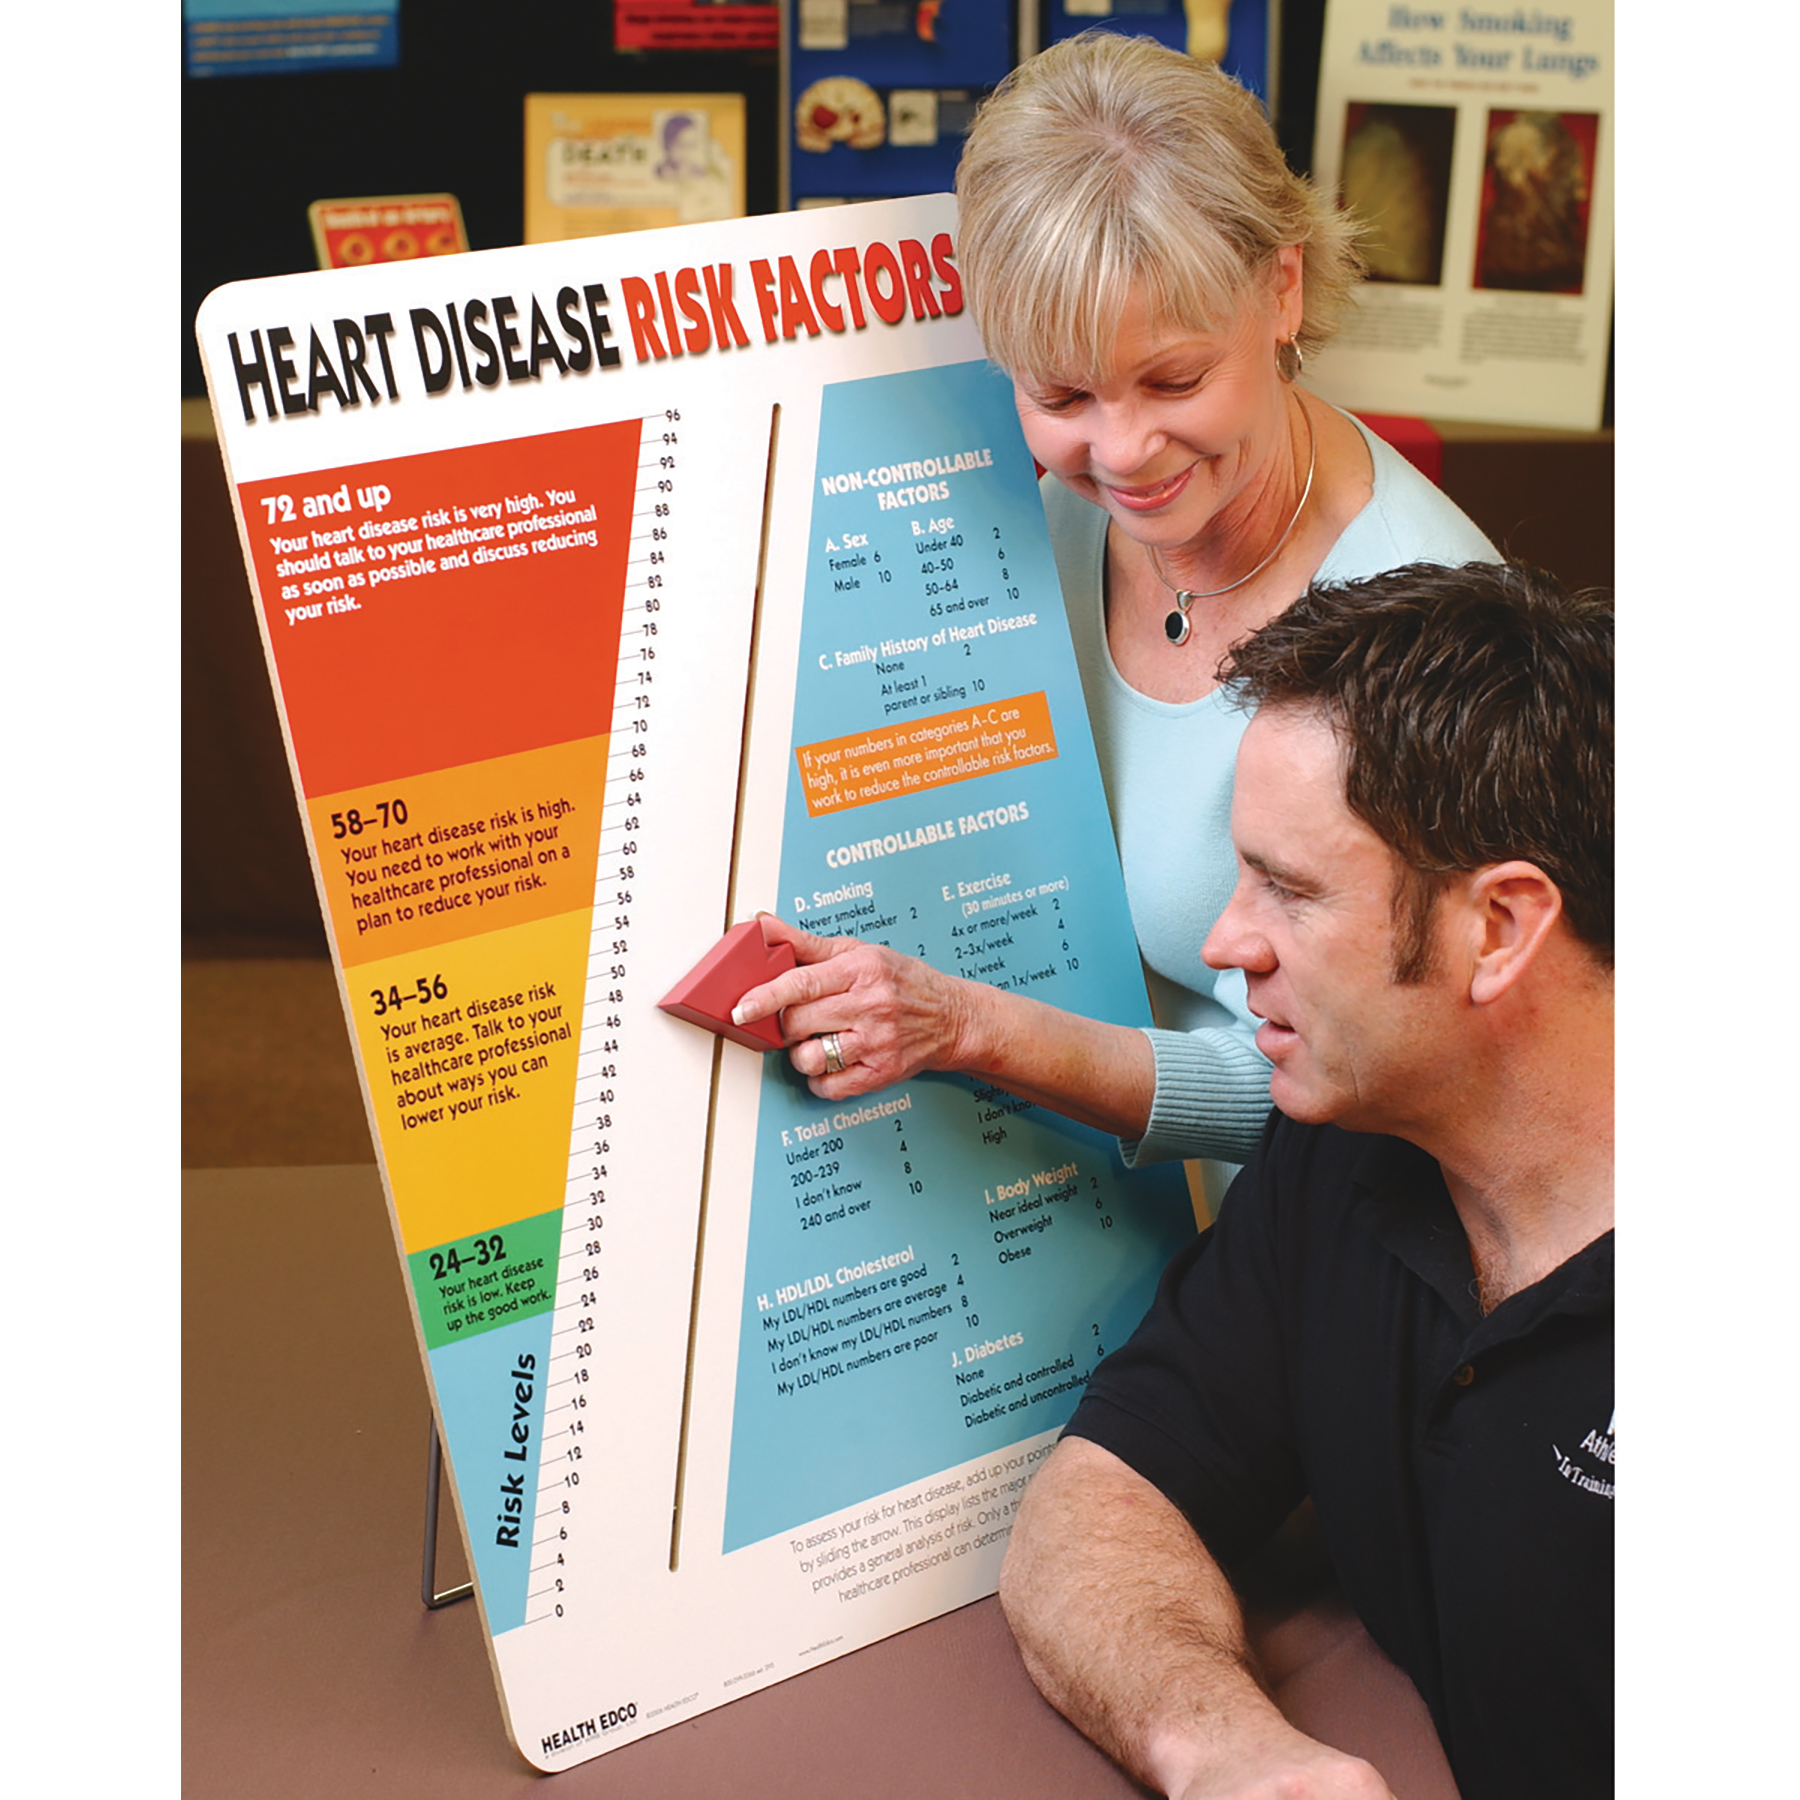 Heart Disease Risk Factors Display for heart health education